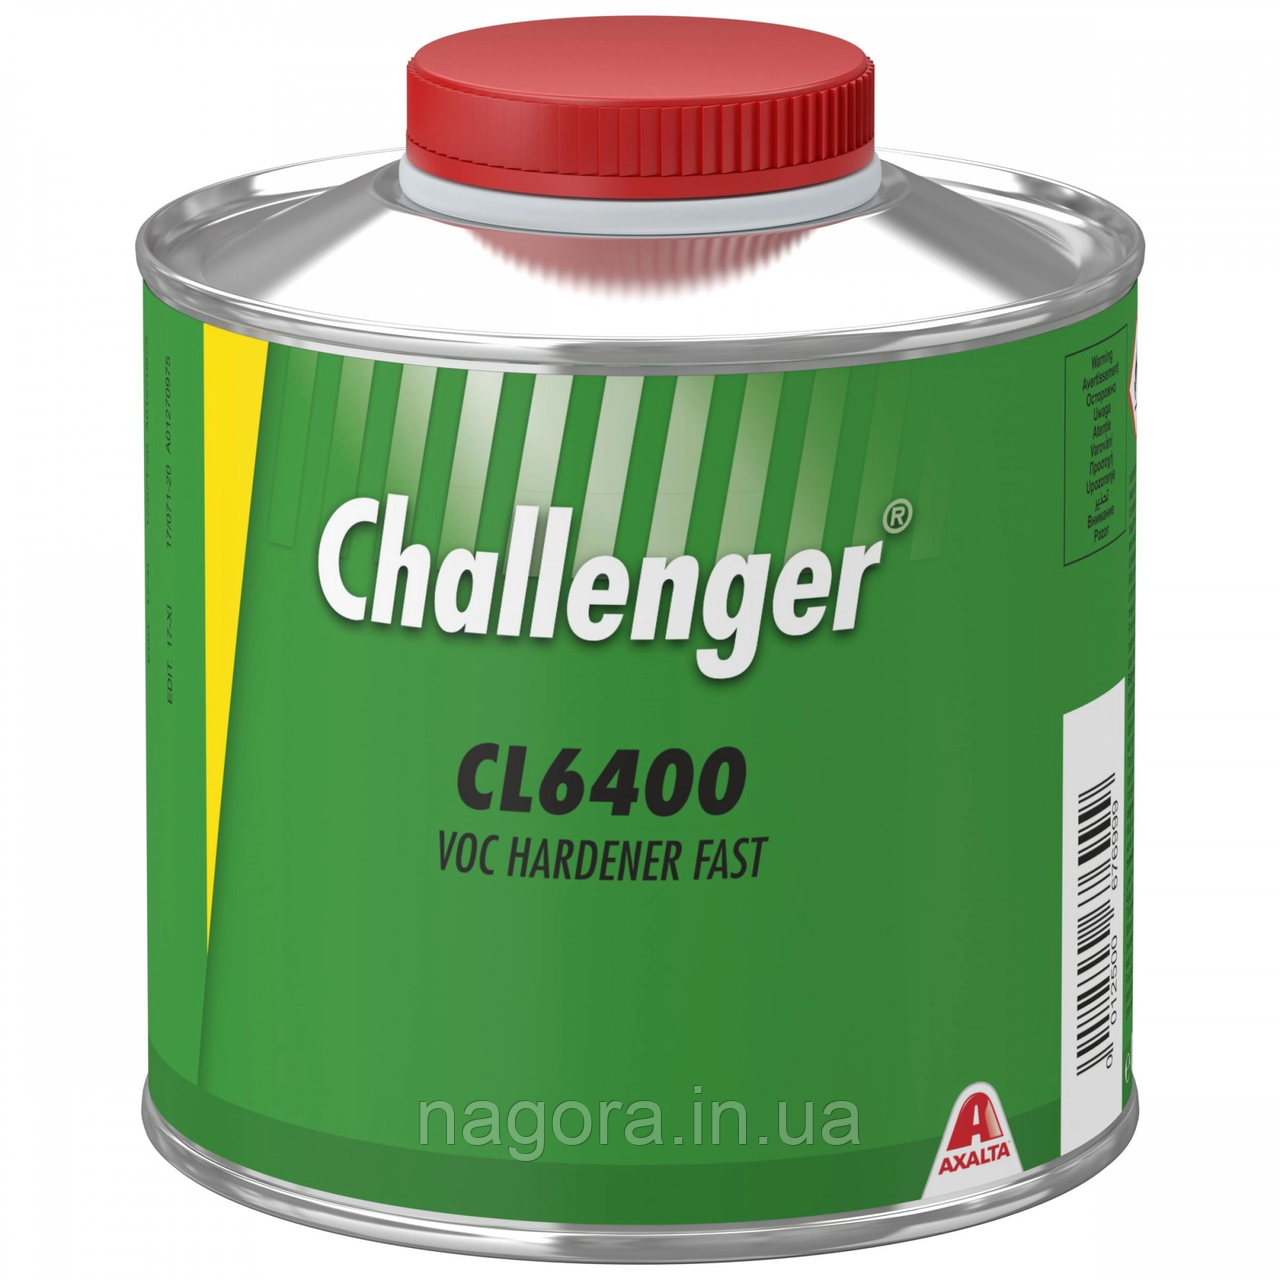 Затверджувач Challenger VOC CL6400 швидкий (500мл)